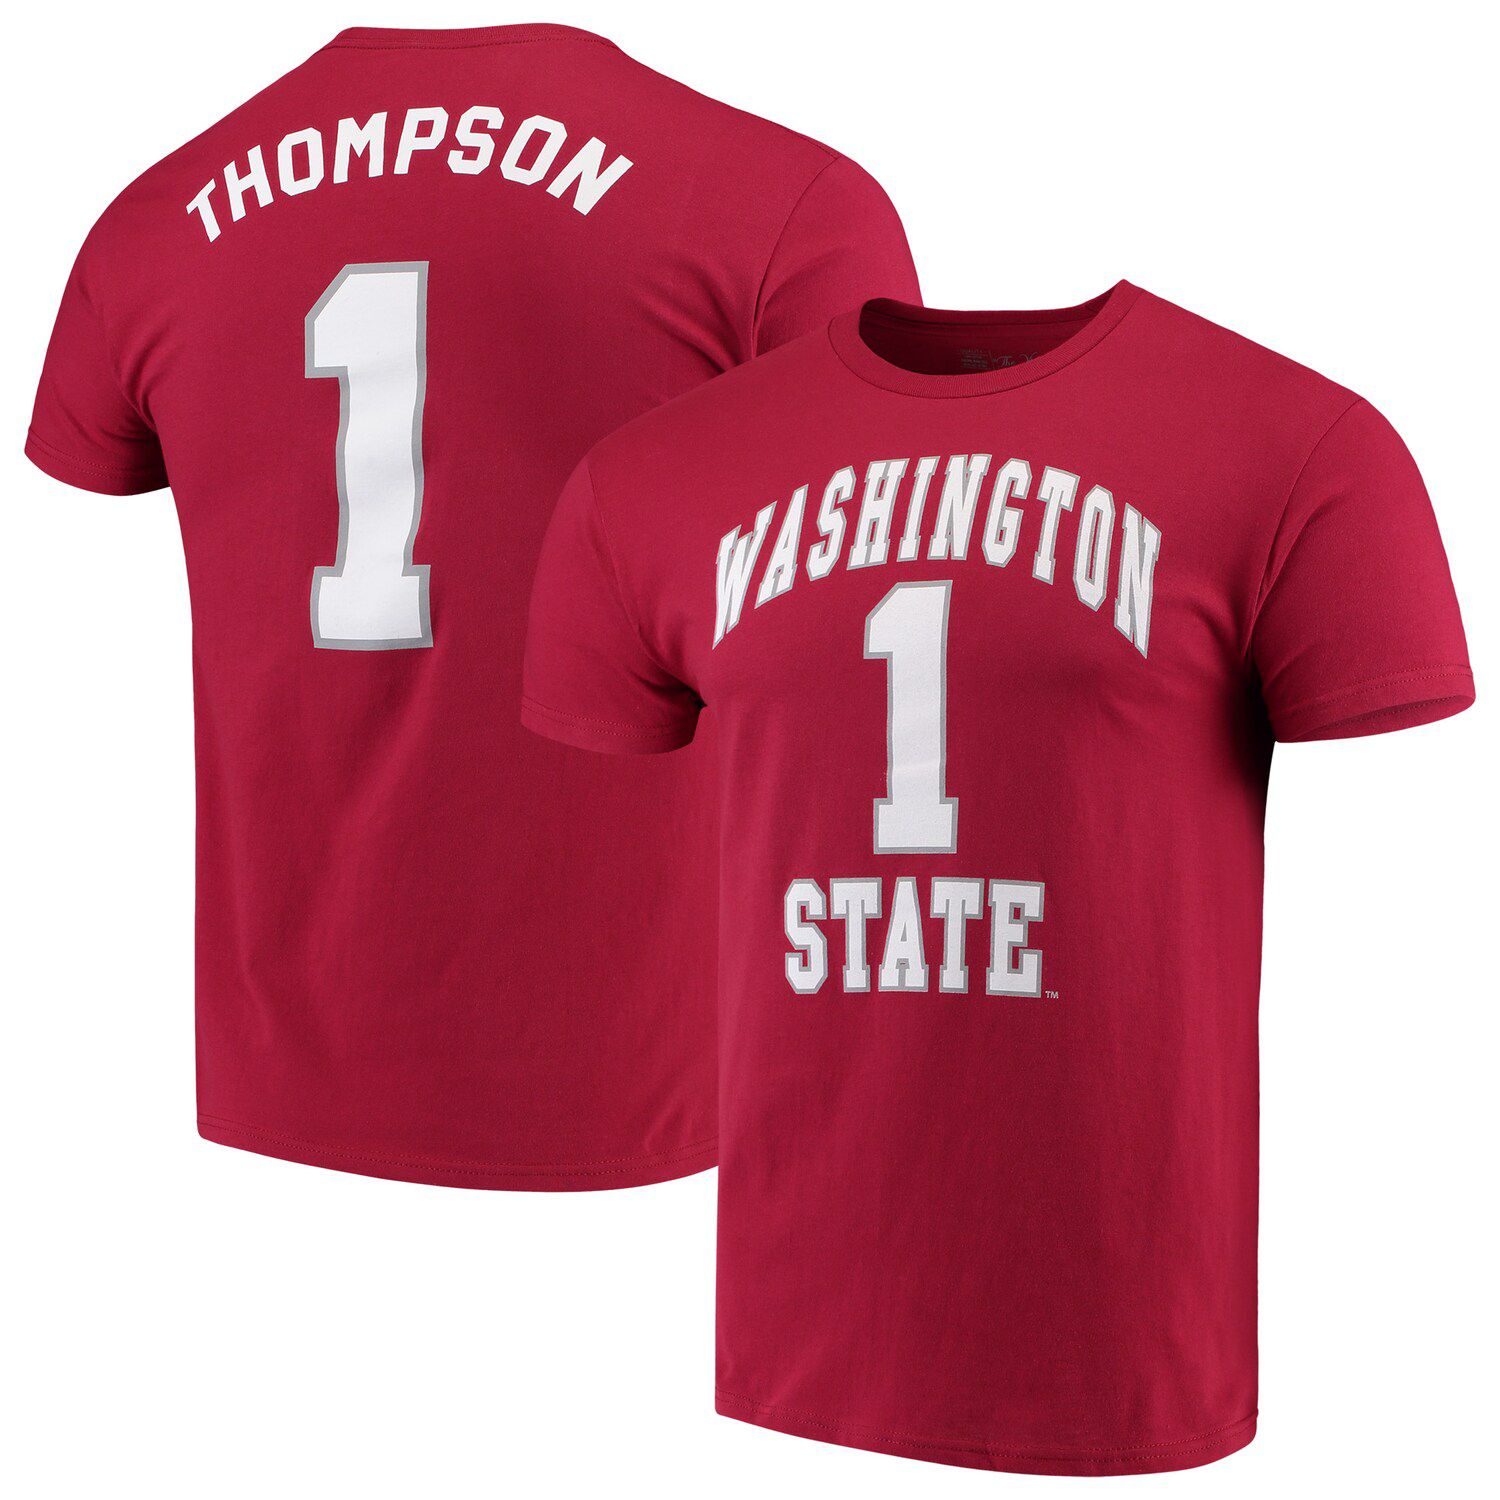 klay thompson washington state jersey